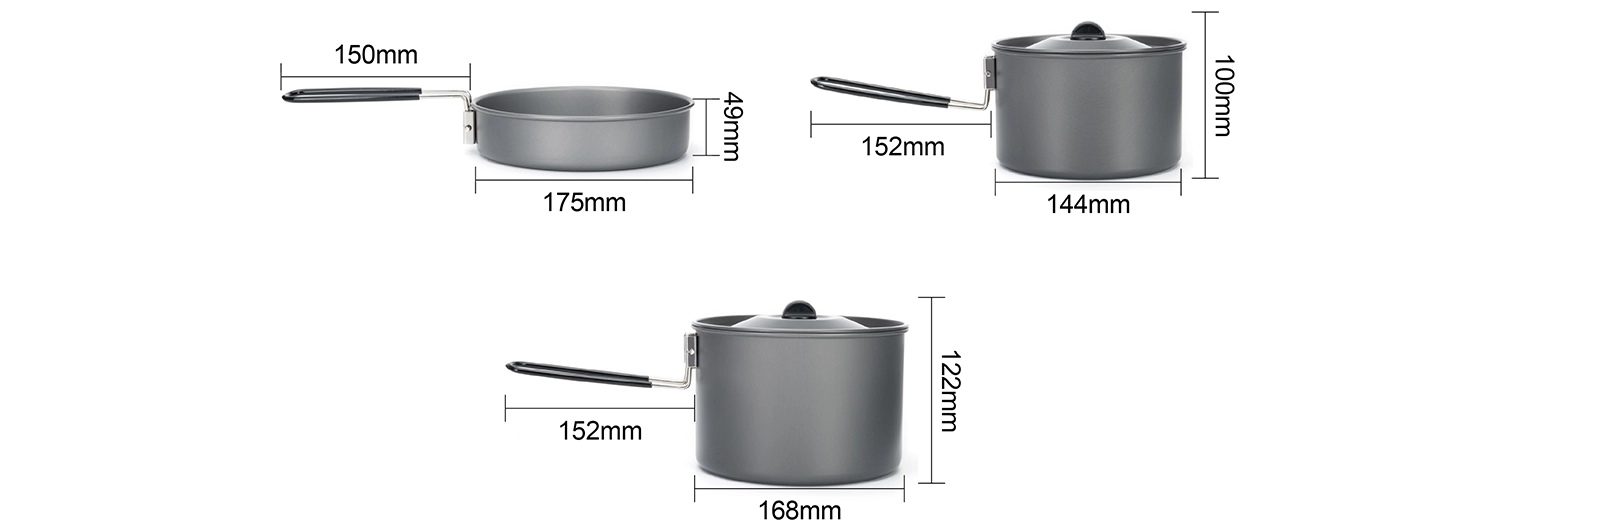 details of Aluminum Camping Cookware Sauce Pot and Pan for Lightweight Camping